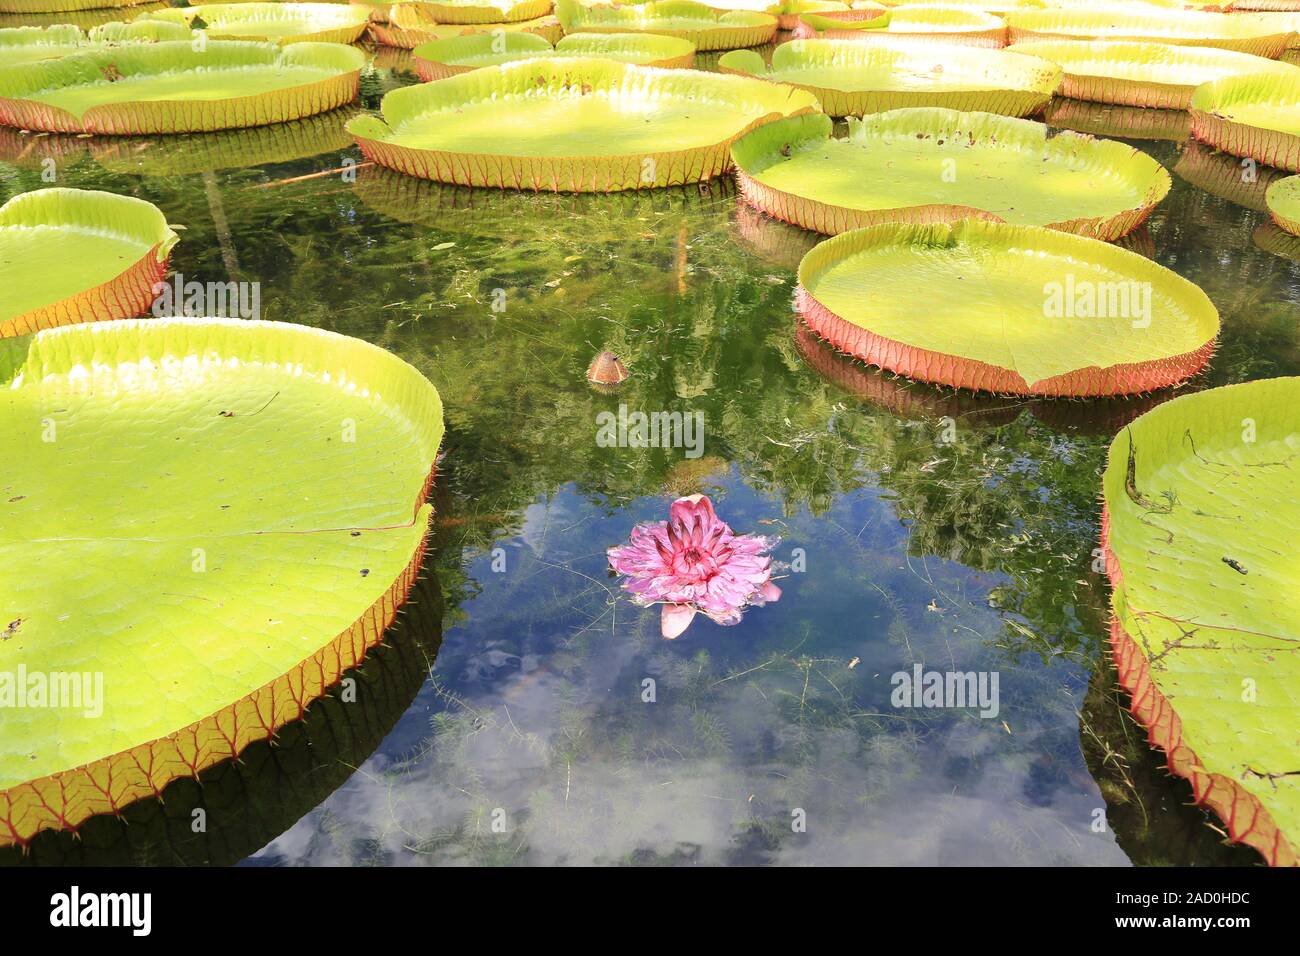 Mauritius, Pamplemousses, Botanical garden, Giant water lily, Victoria regia Stock Photo